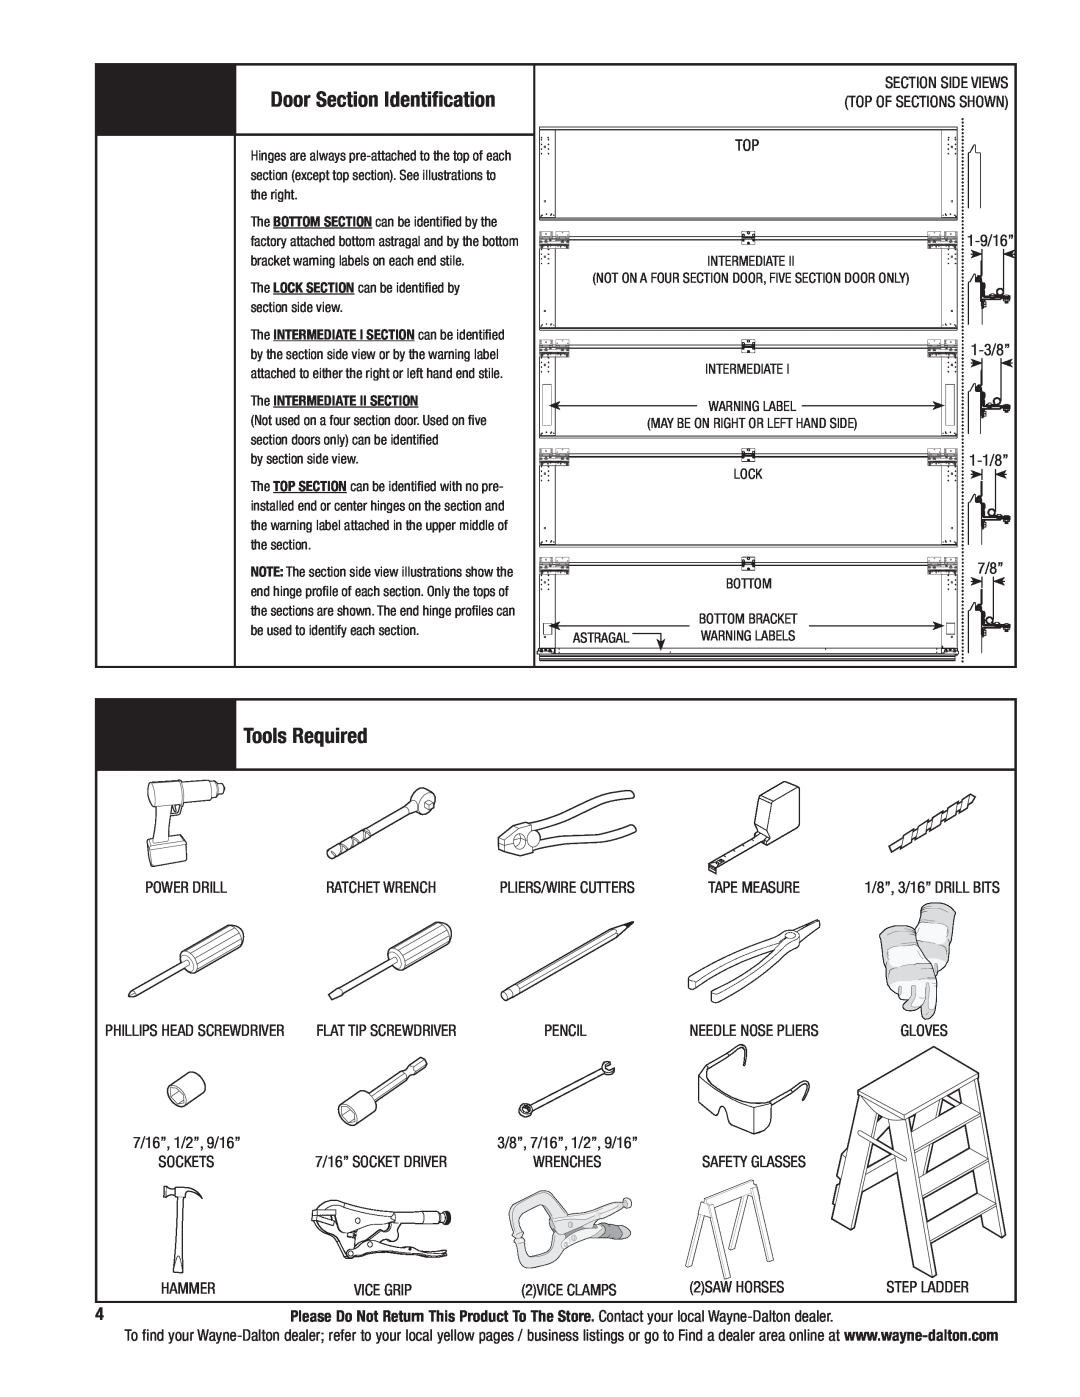 Wayne-Dalton 9800 installation instructions Door Section Identification, Tools Required 